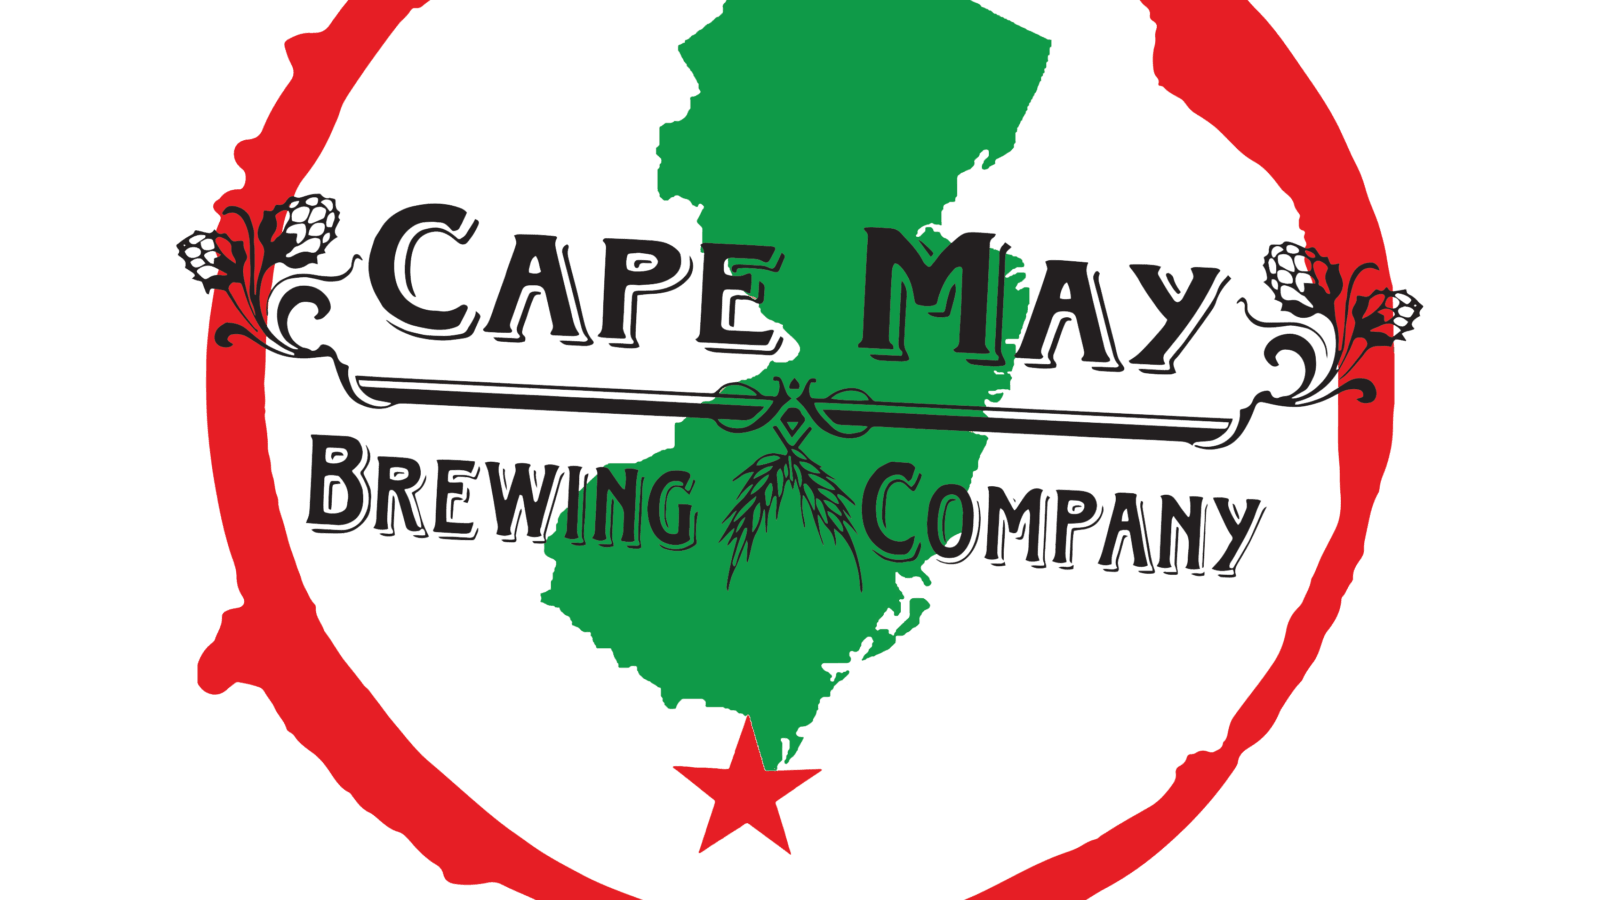 cape may brewing company